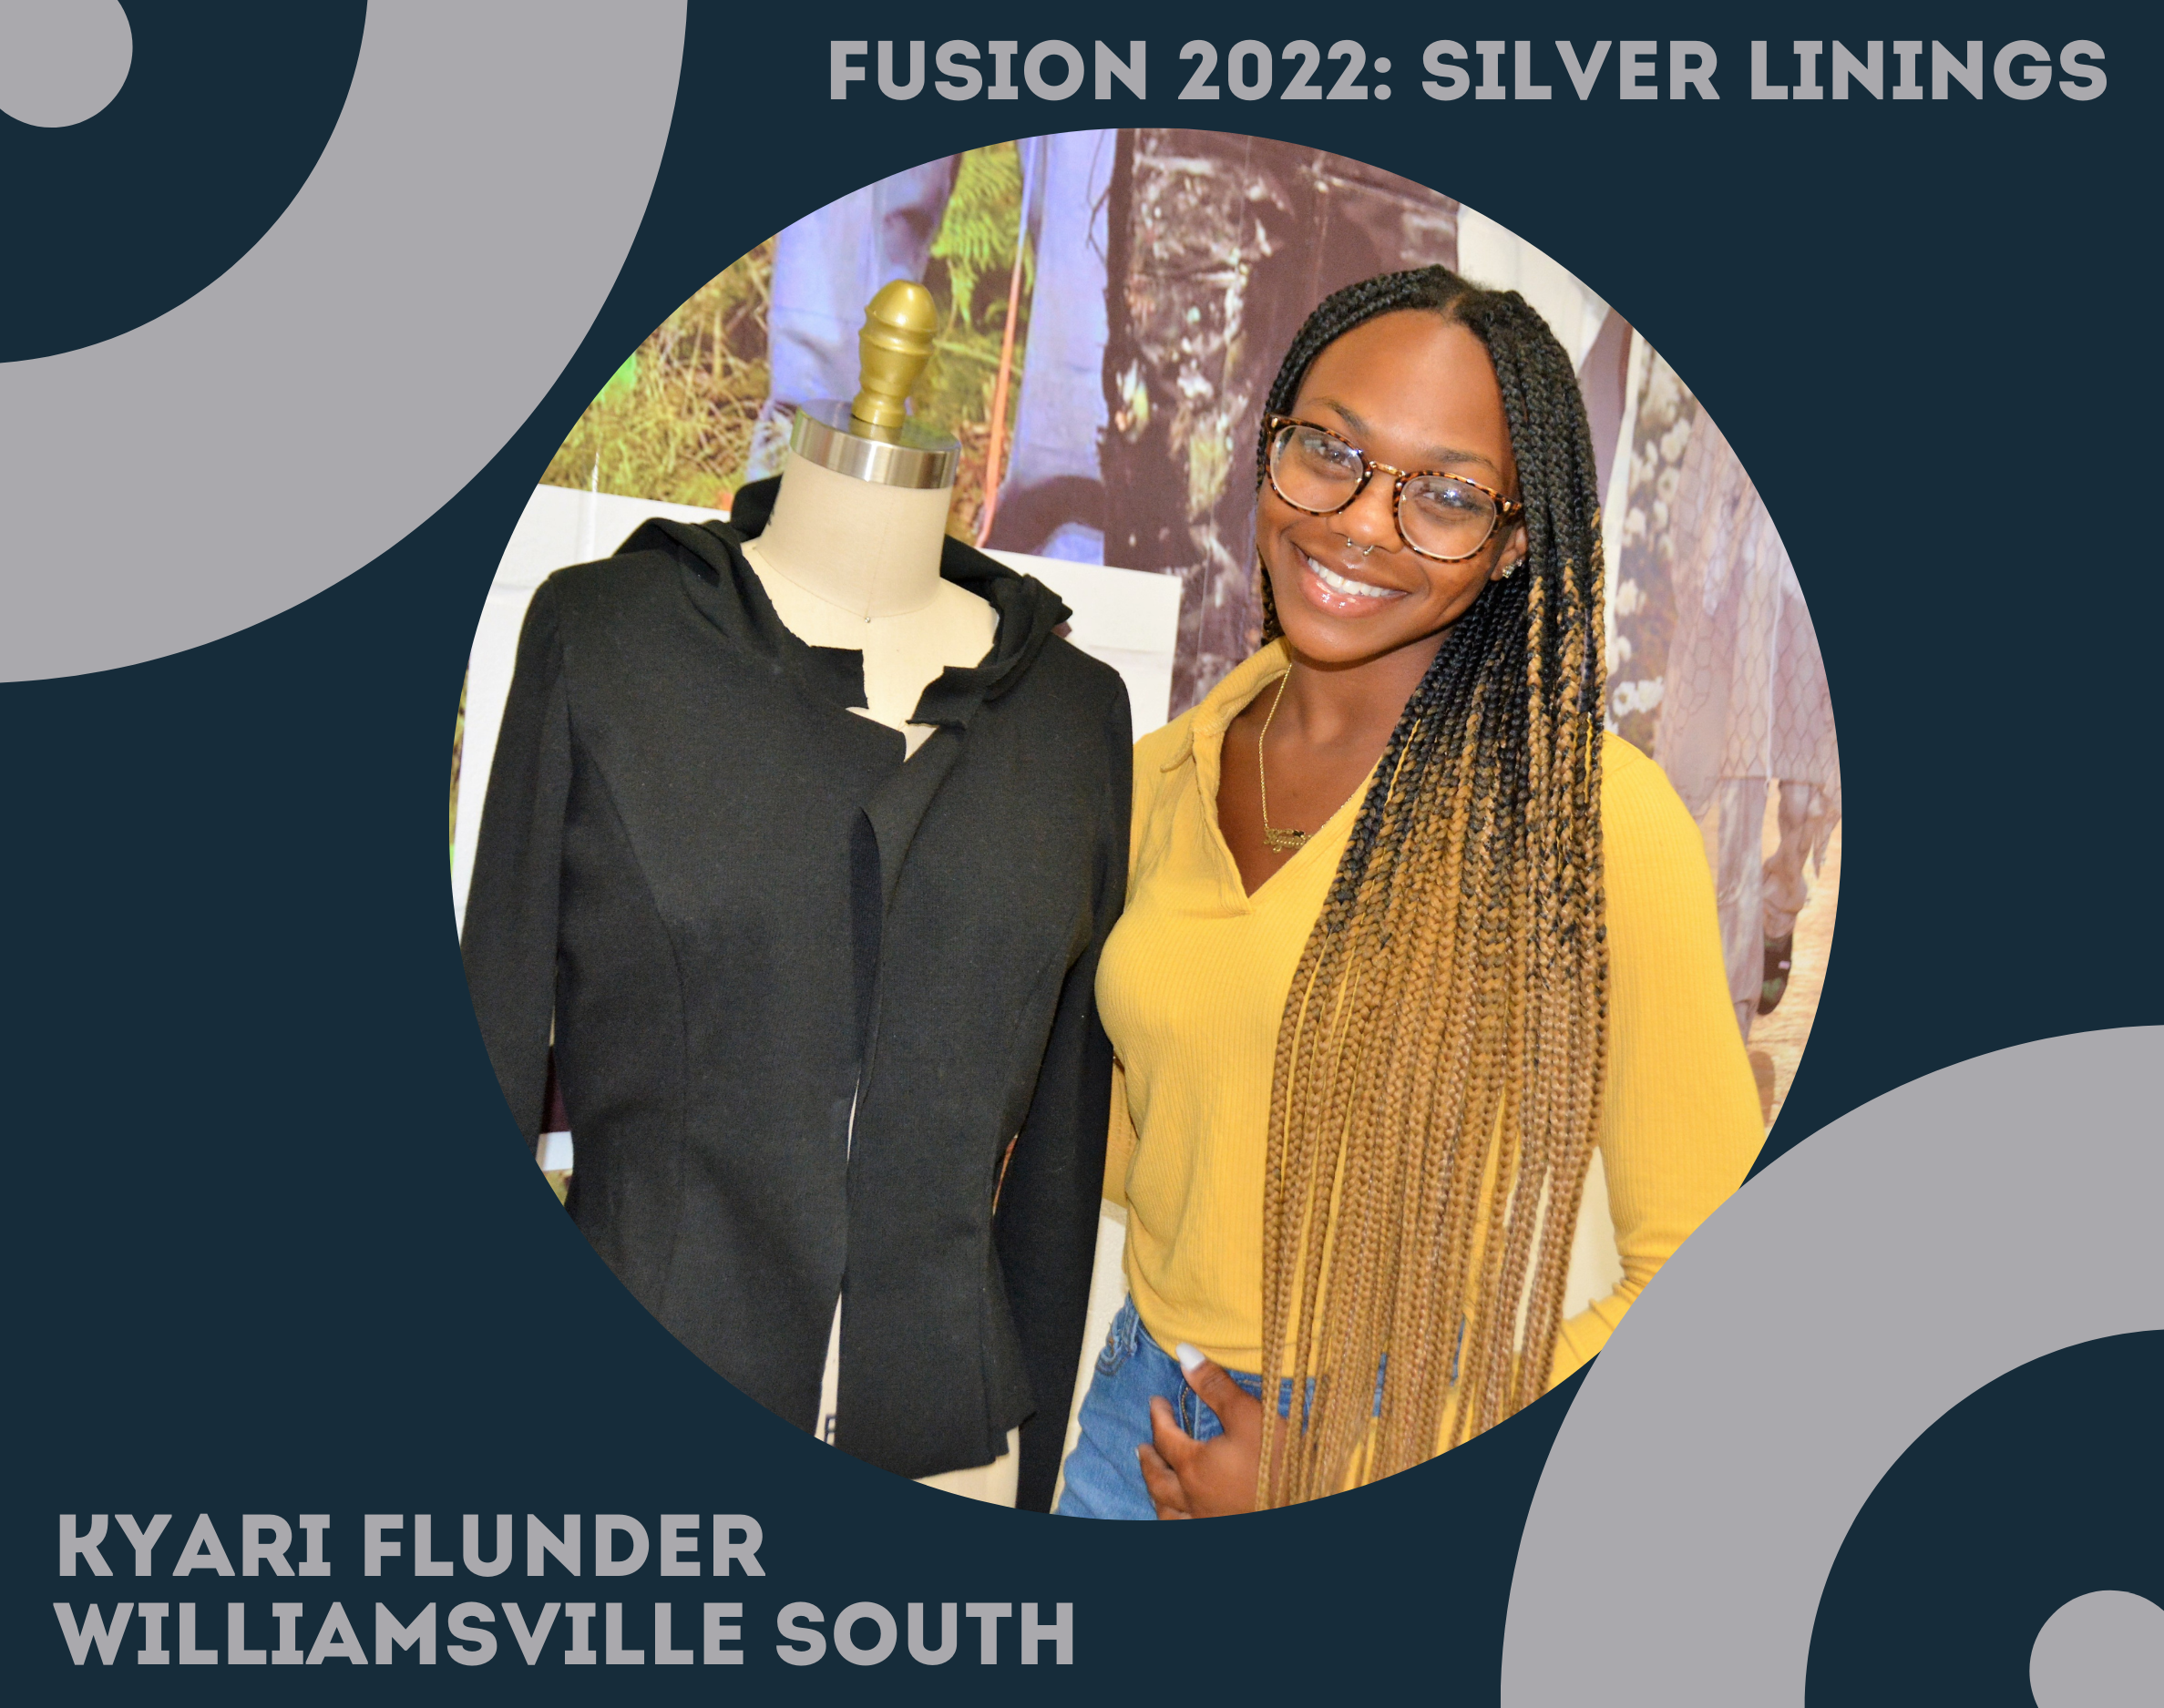 Fusion 2022: Silver Linings. Kyari Flunder, Williamsville South